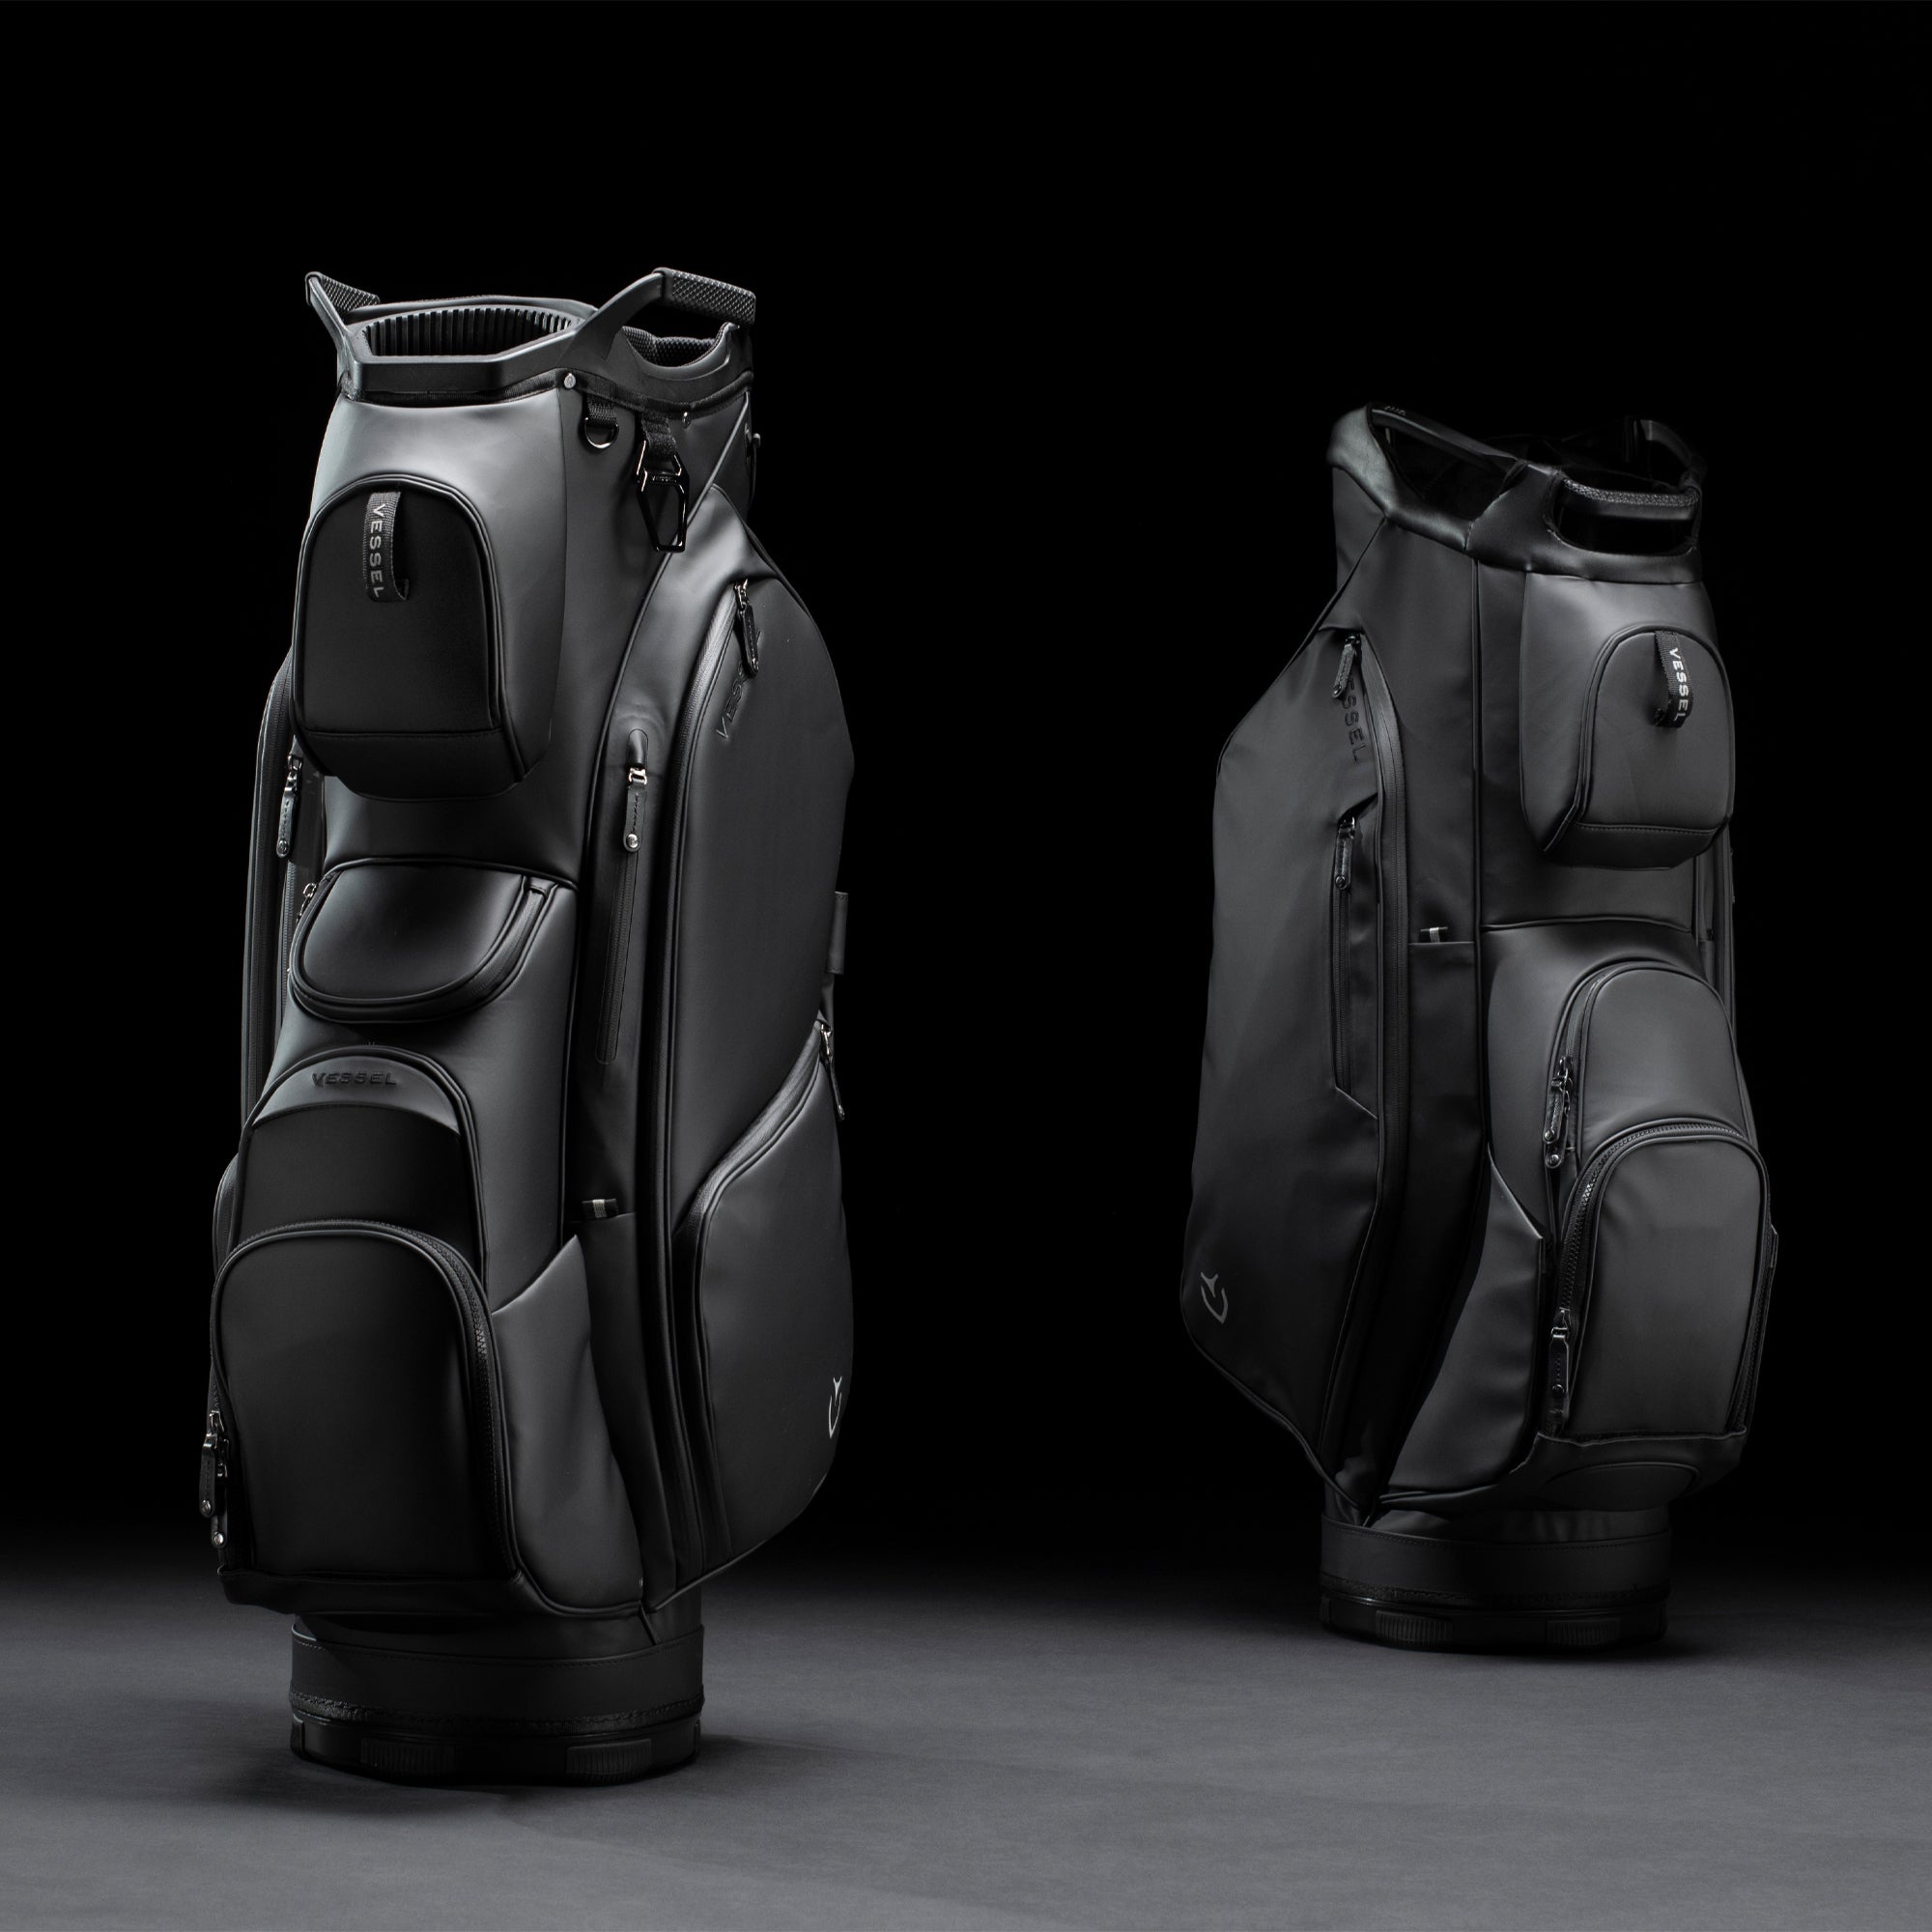 Personalized & Custom Golf Bags